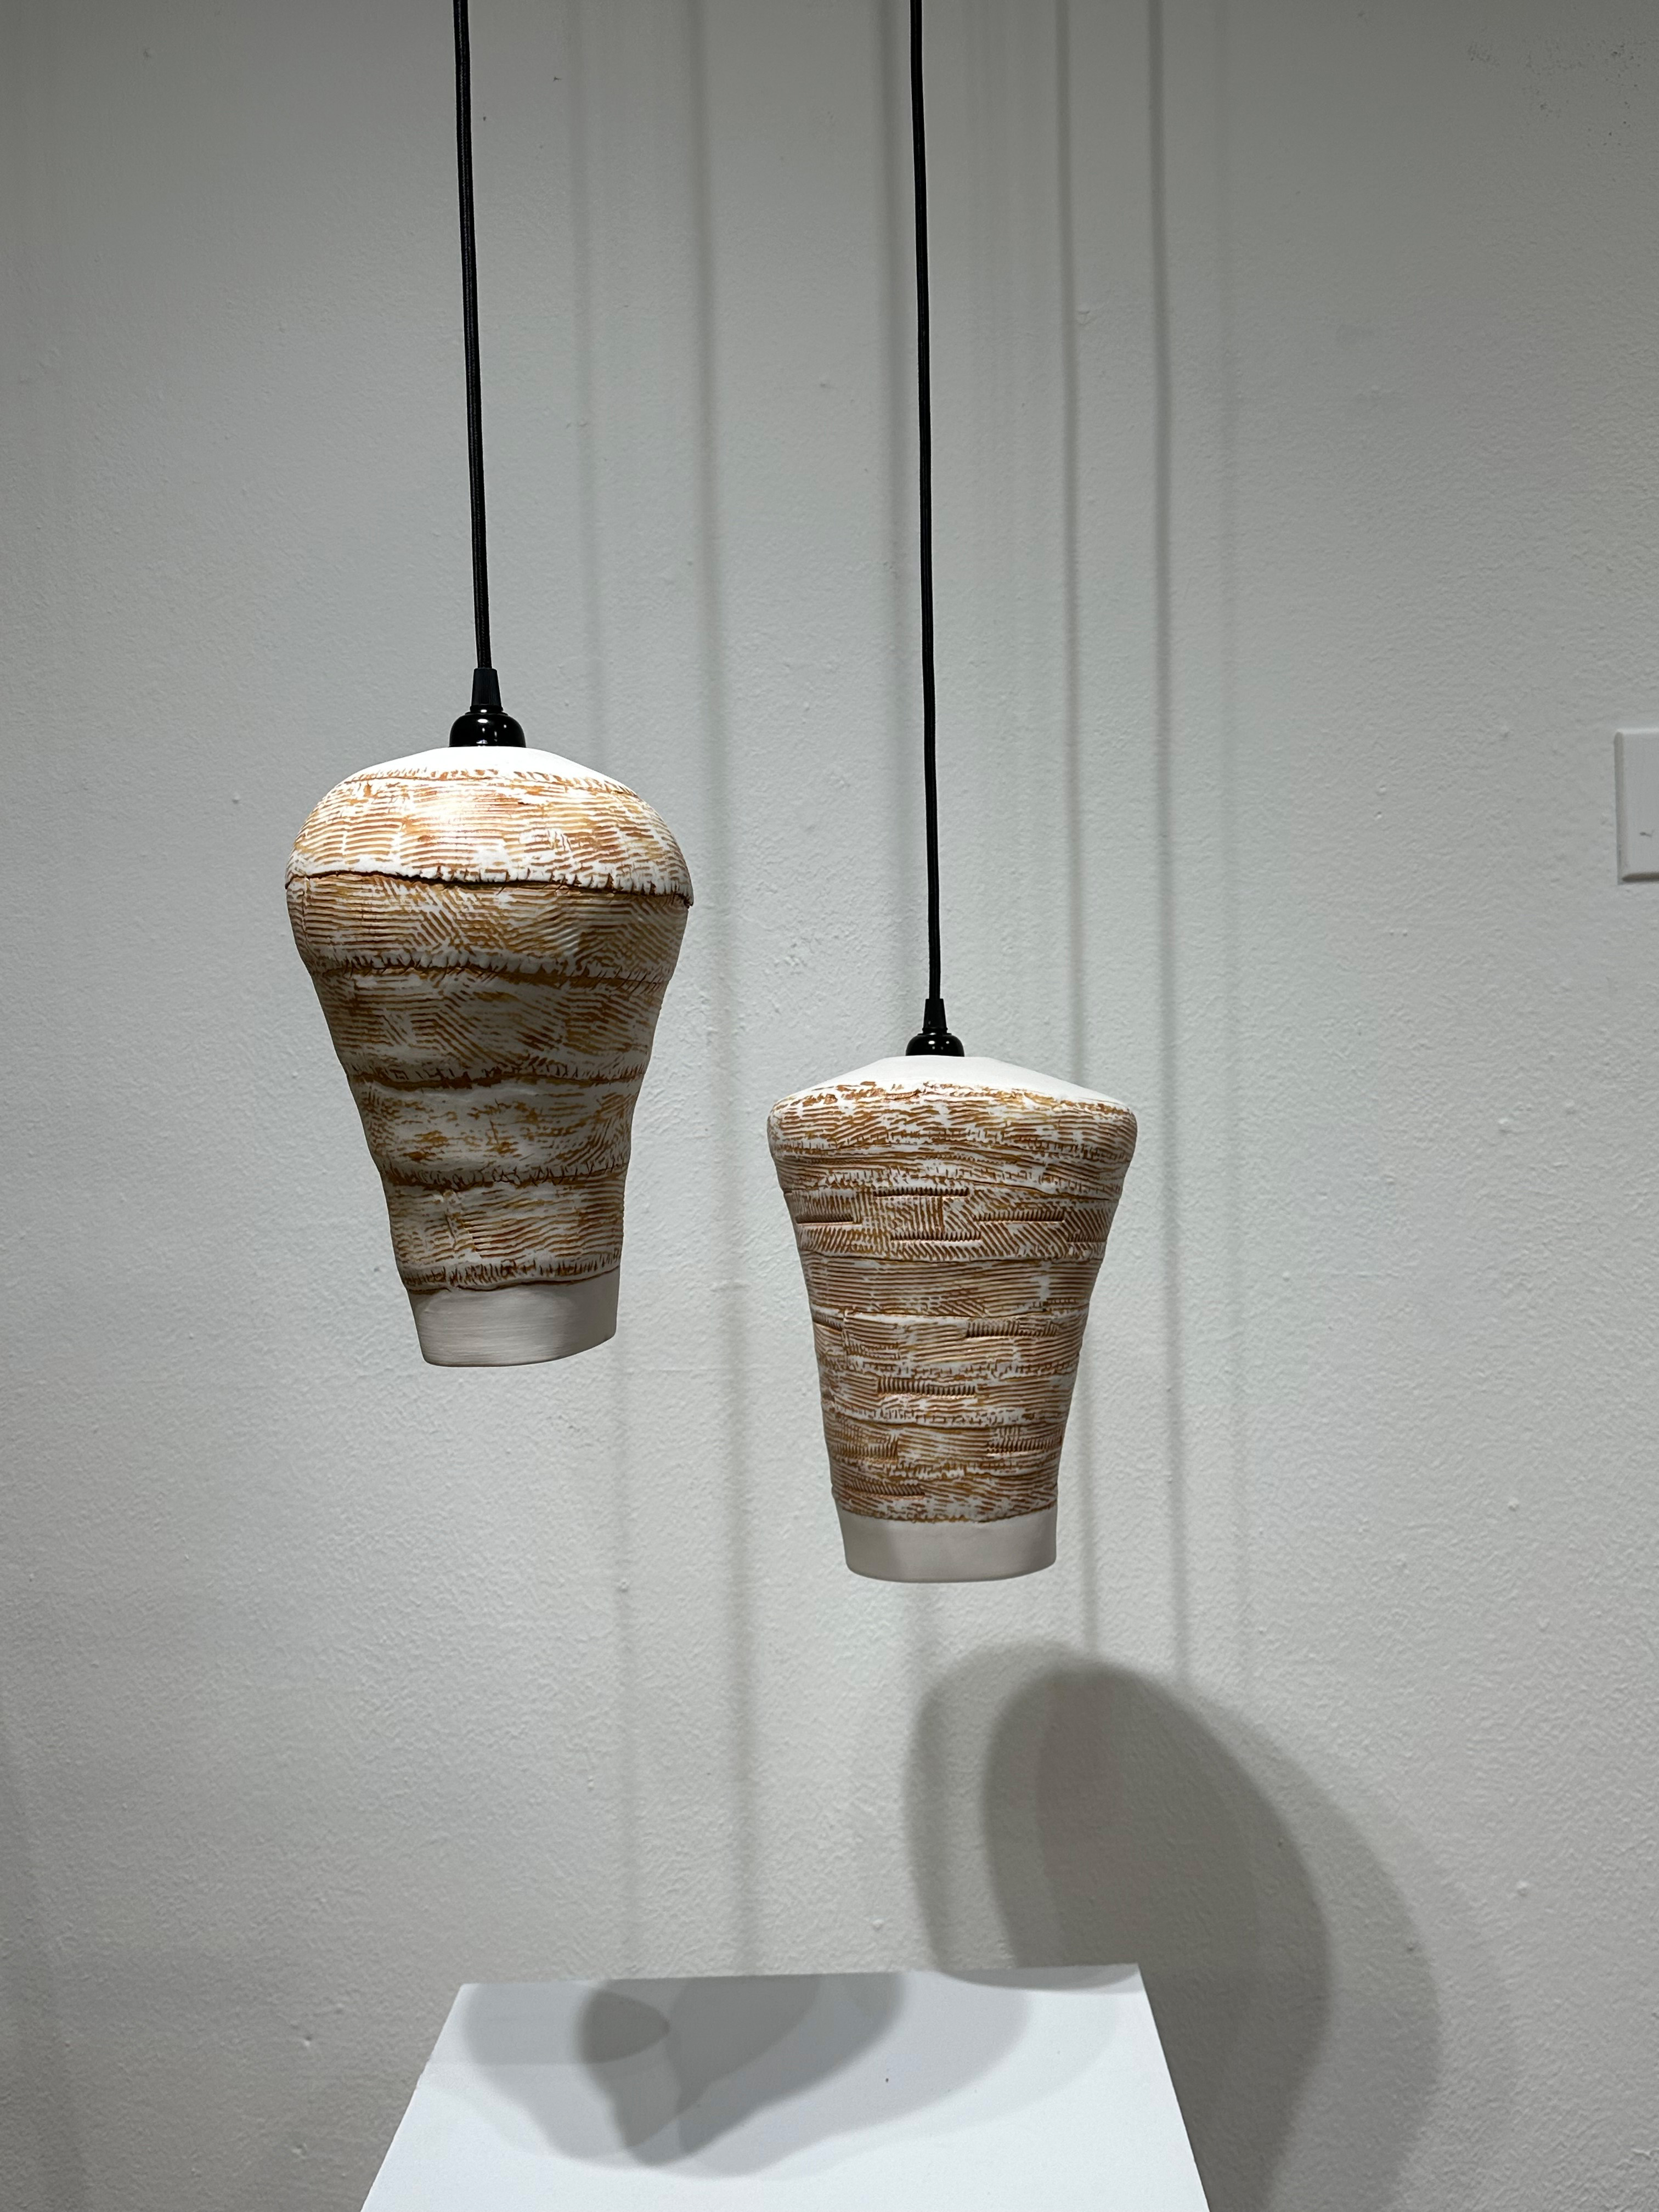 2 pendant porcelain lights created by Lisa Ehrich